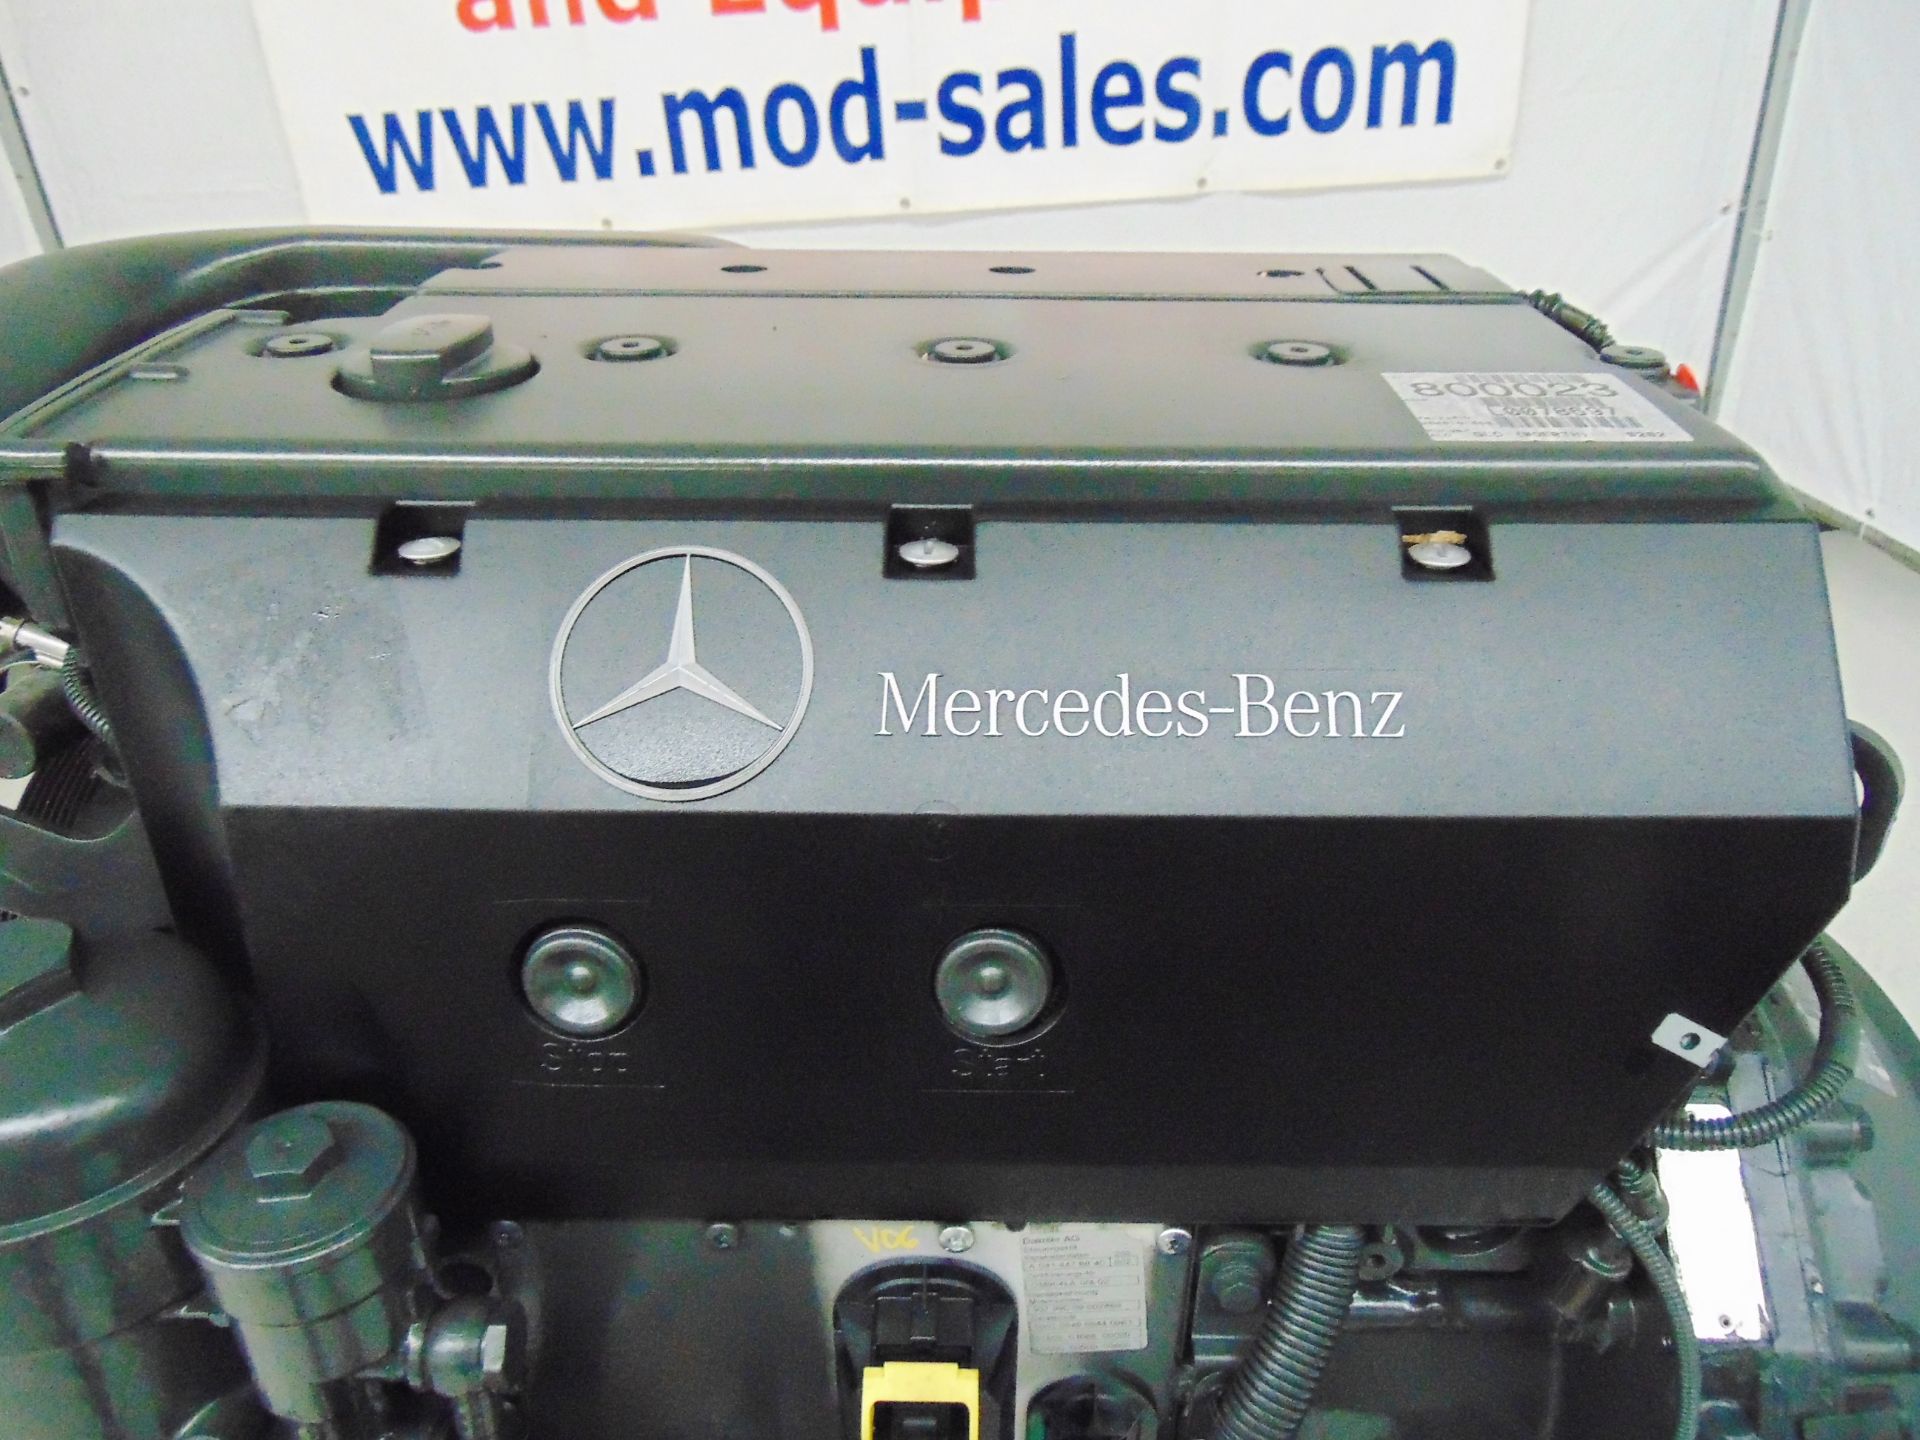 Brand New & Unused Mercedes-Benz OM904LA Turbo Diesel Engine - Image 2 of 15